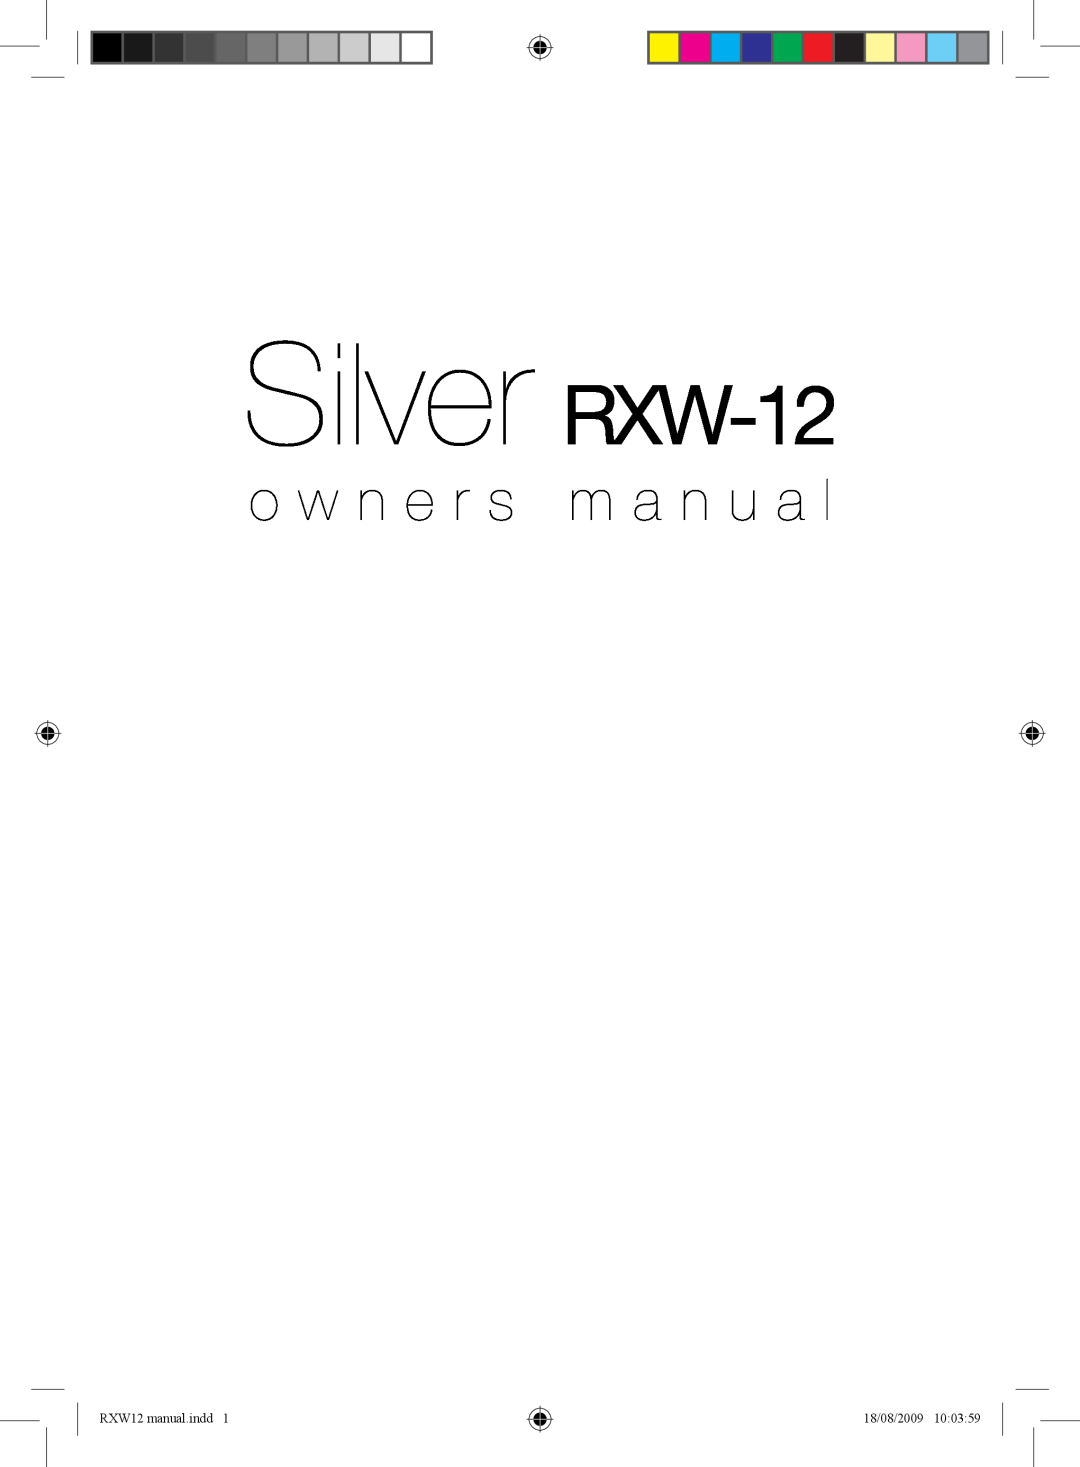 Monitor Audio owner manual Silver RXW-12, o w n e r s m a n u a l, RXW12 manual.indd, 18/08/2009 